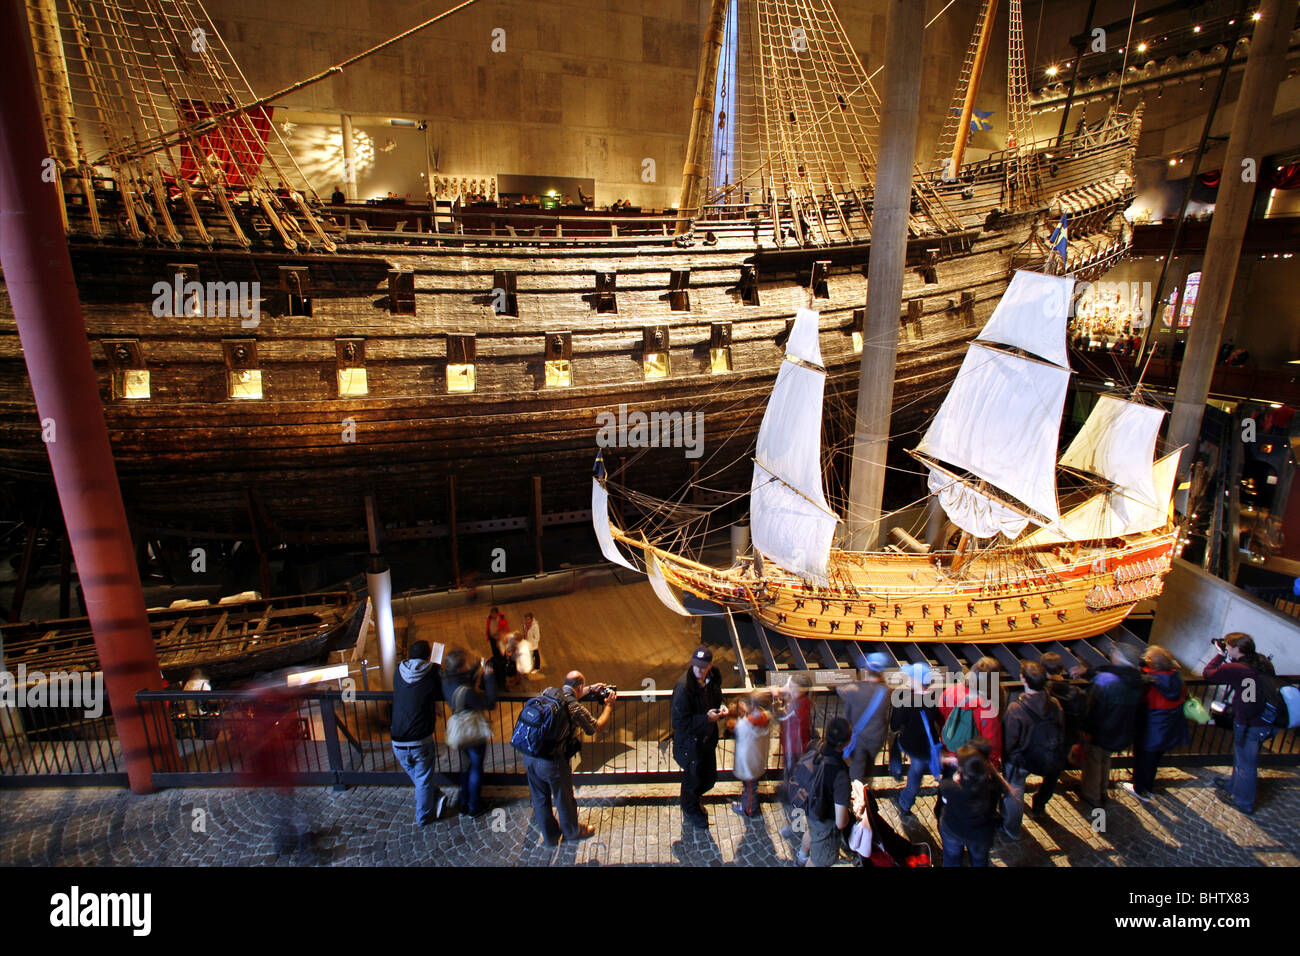 Vasa Vasa Ship Wreck et Modèle, Vasamuseet / musée Vasa, Djurgården, Stockholm, Suède Banque D'Images